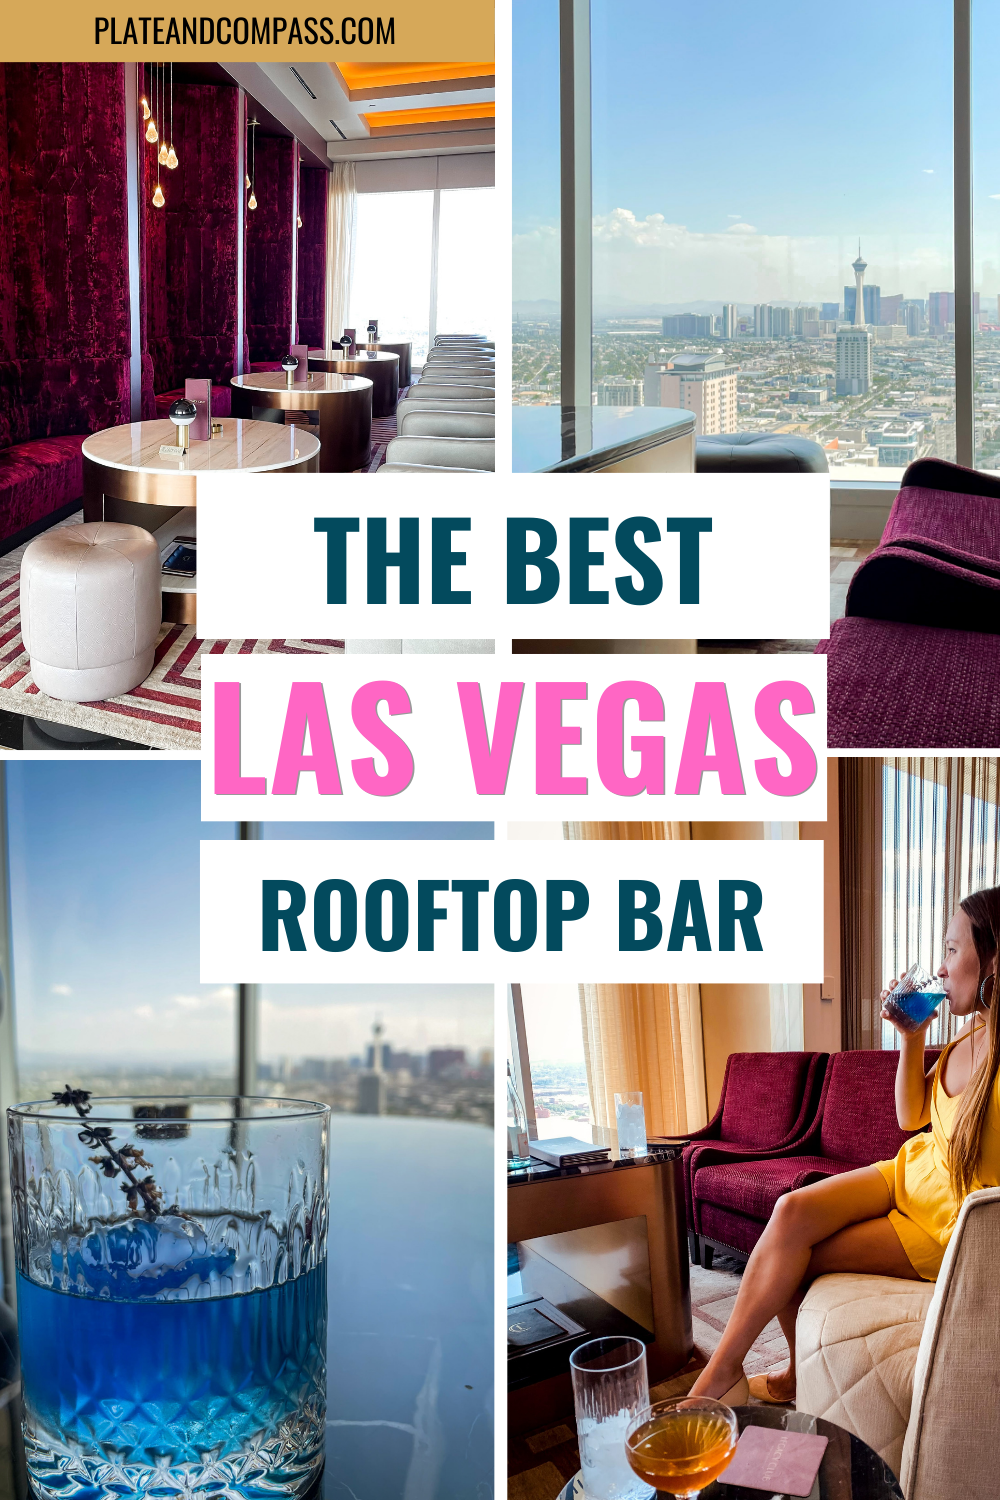 The Best Las Vegas Rooftop Bar